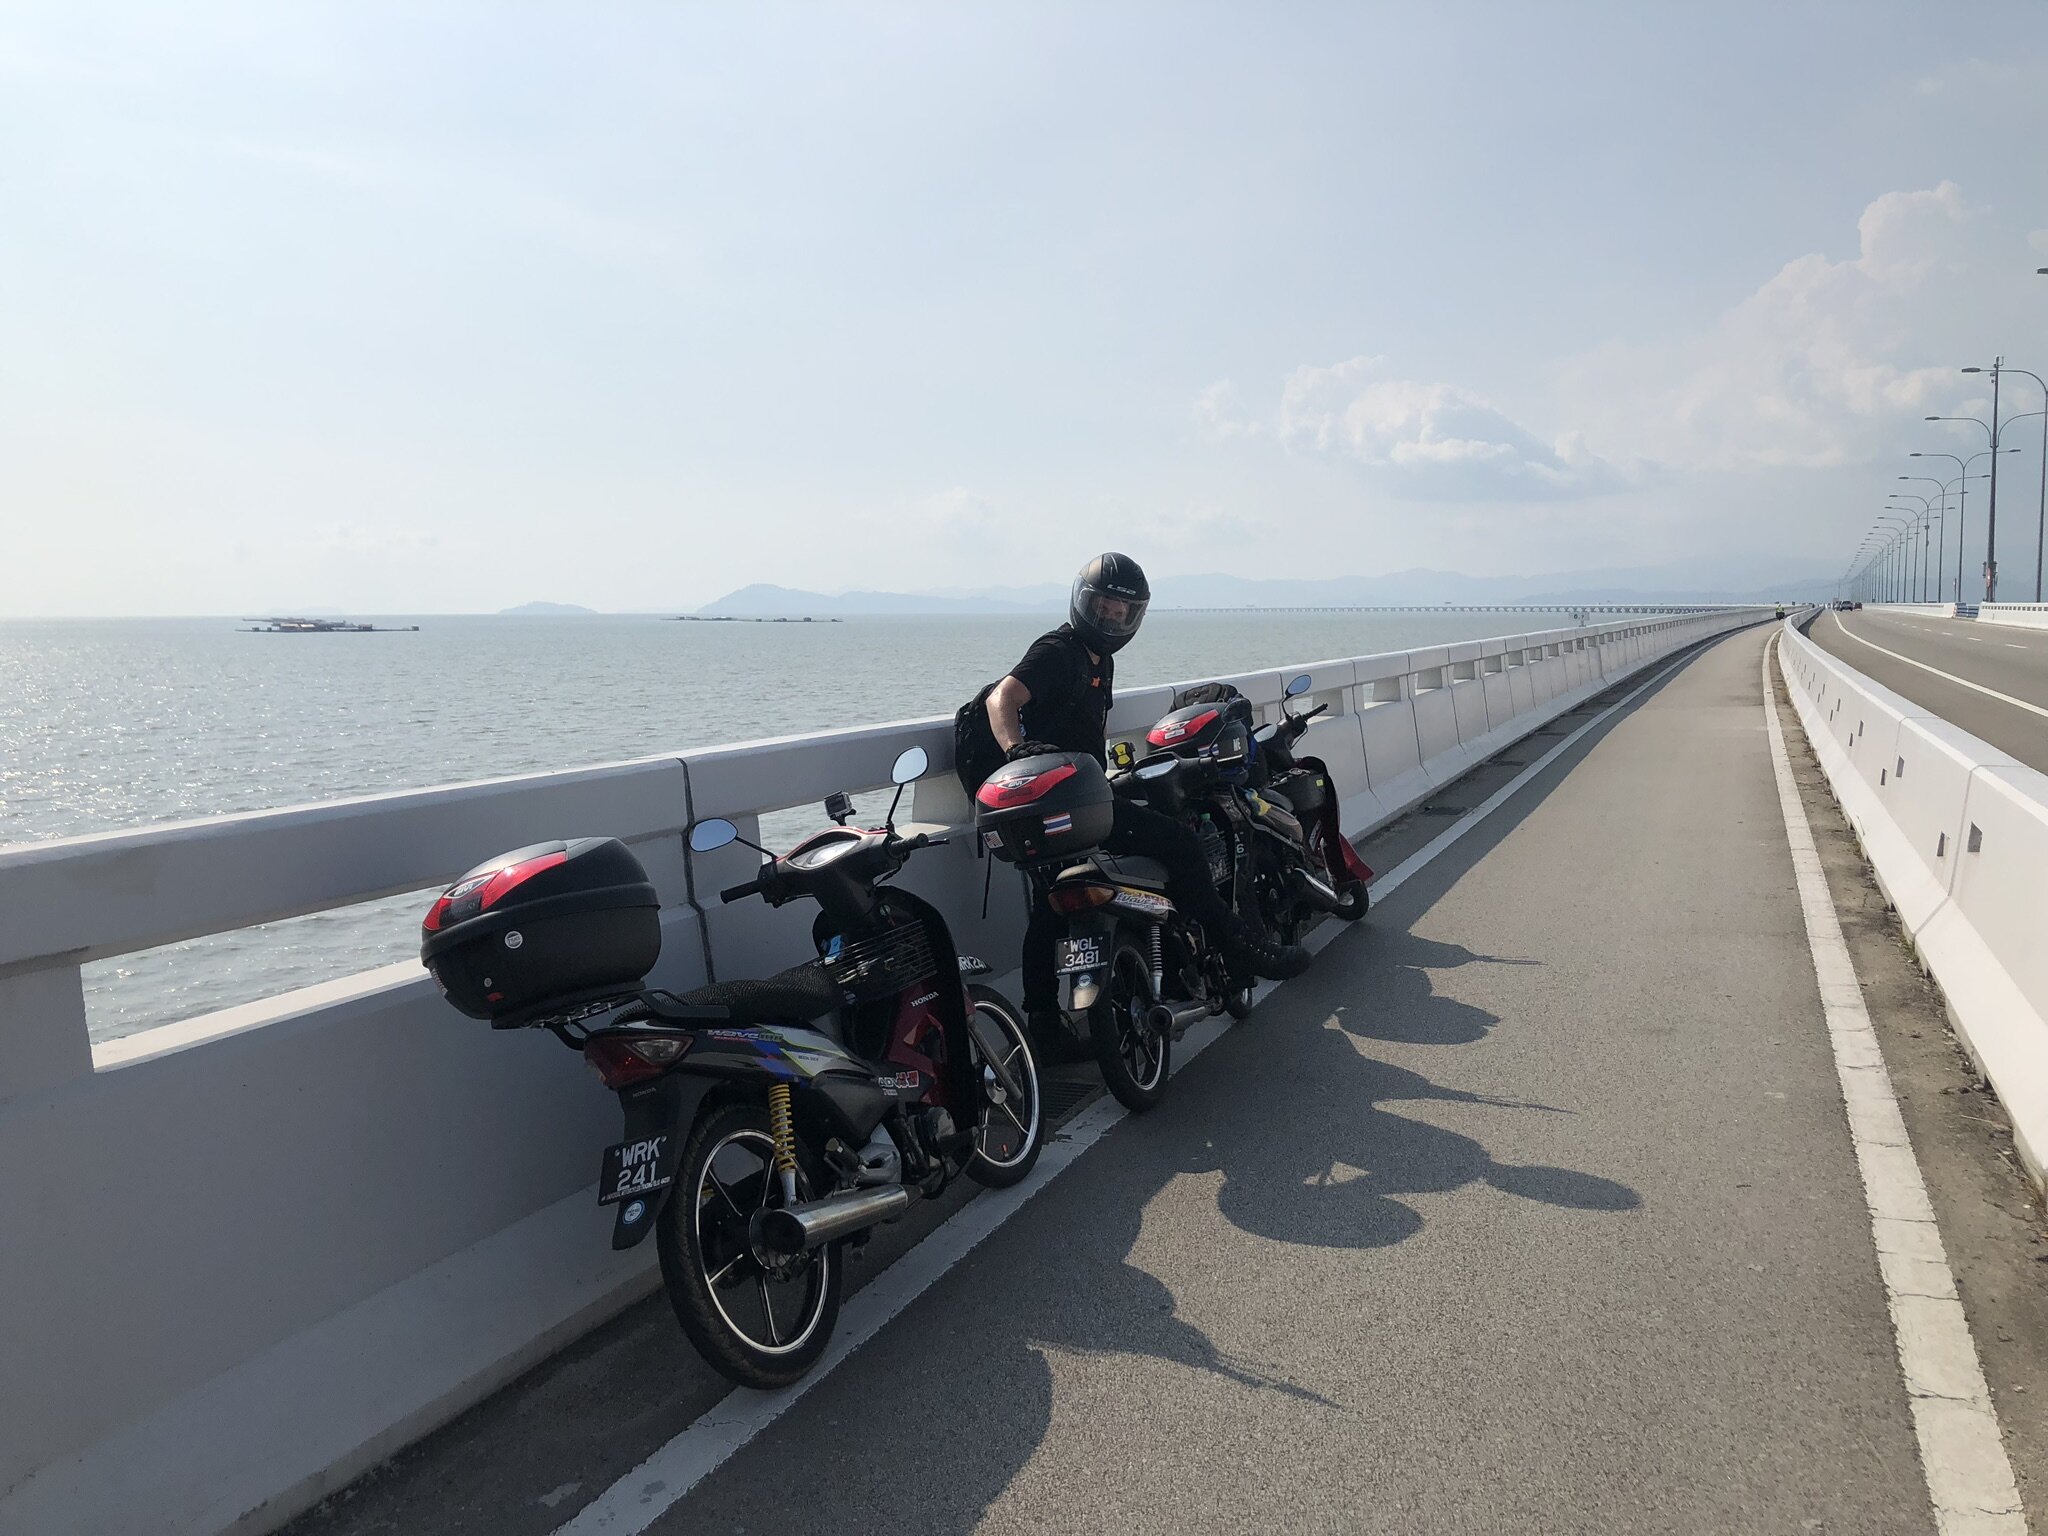 24km bridge joining the mainland and Penang